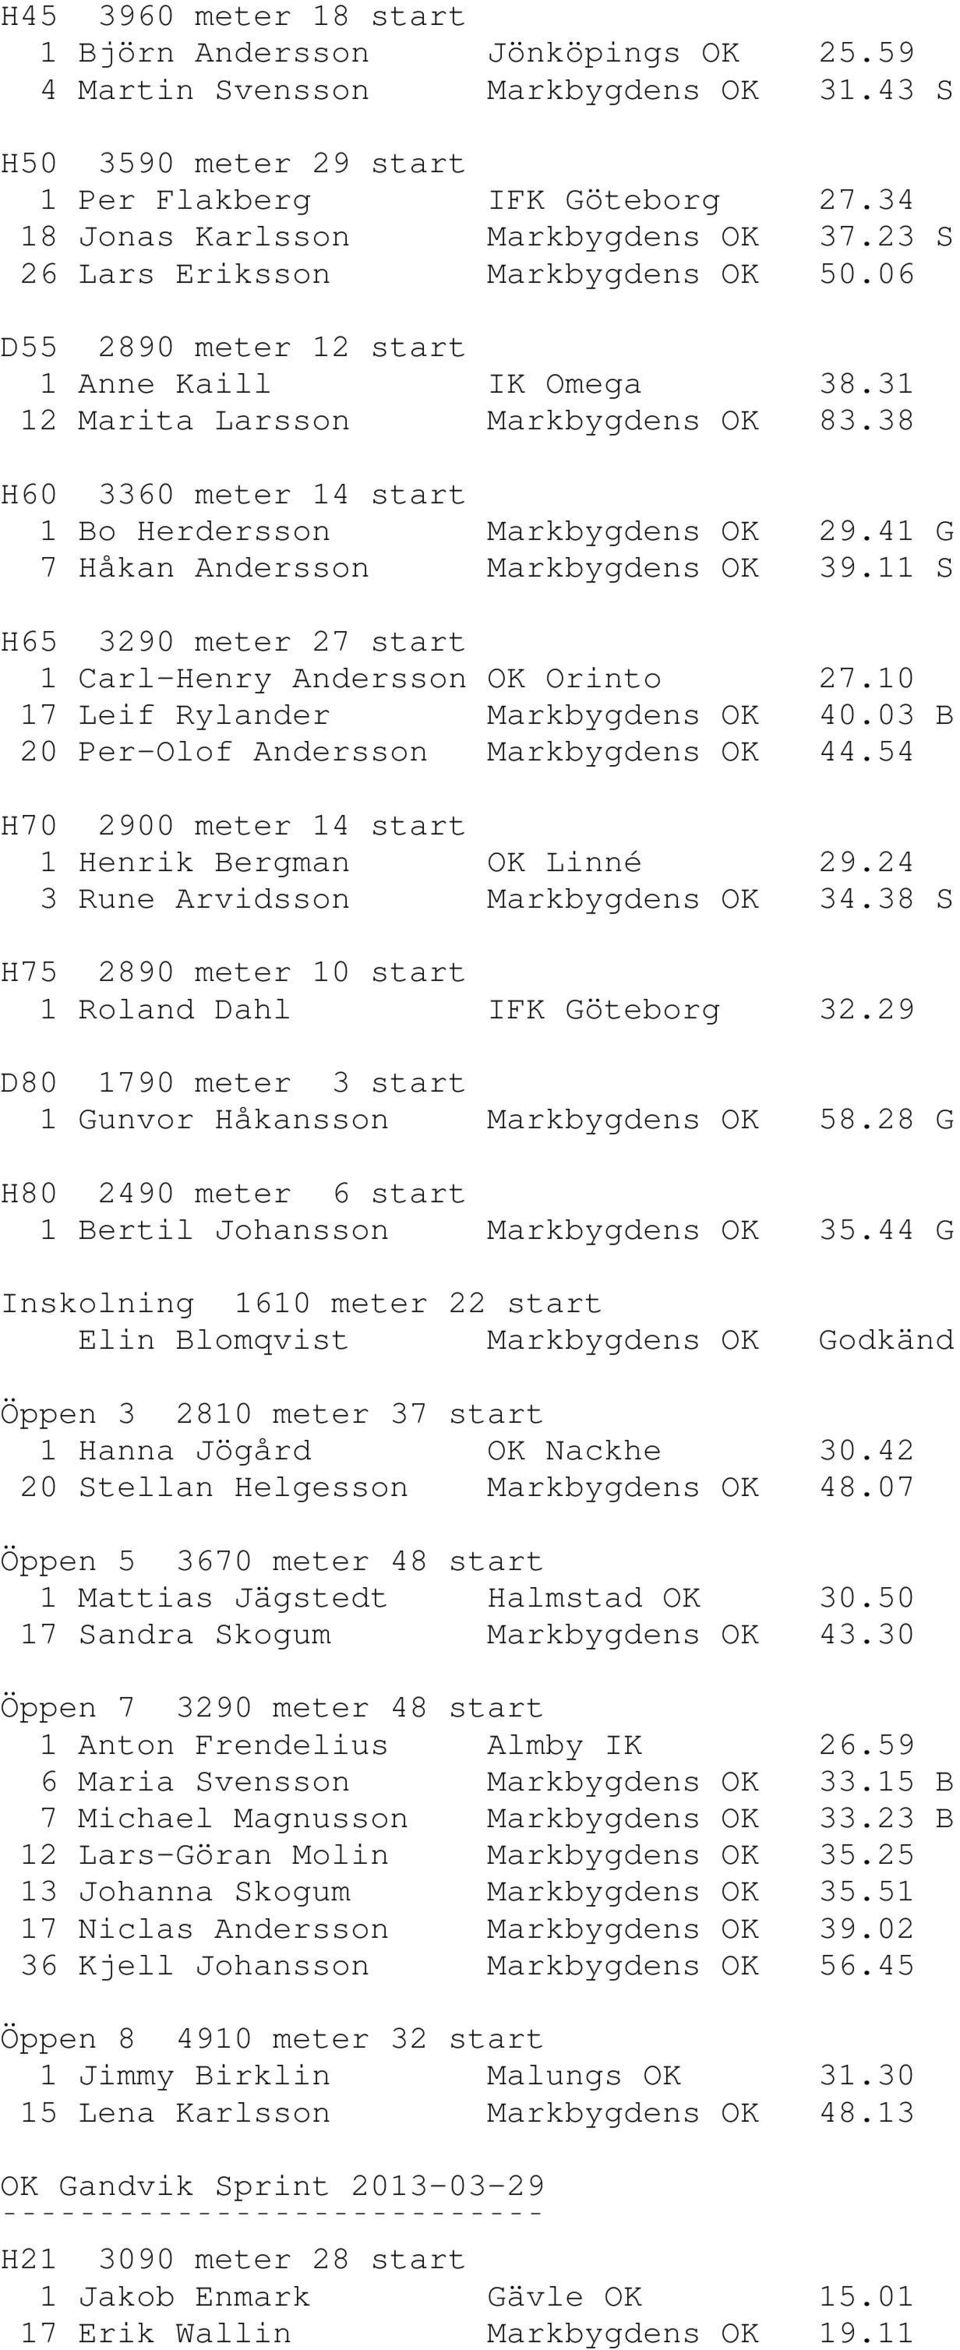 41 G 7 Håkan Andersson Markbygdens OK 39.11 S H65 3290 meter 27 start 1 Carl-Henry Andersson OK Orinto 27.10 17 Leif Rylander Markbygdens OK 40.03 B 20 Per-Olof Andersson Markbygdens OK 44.